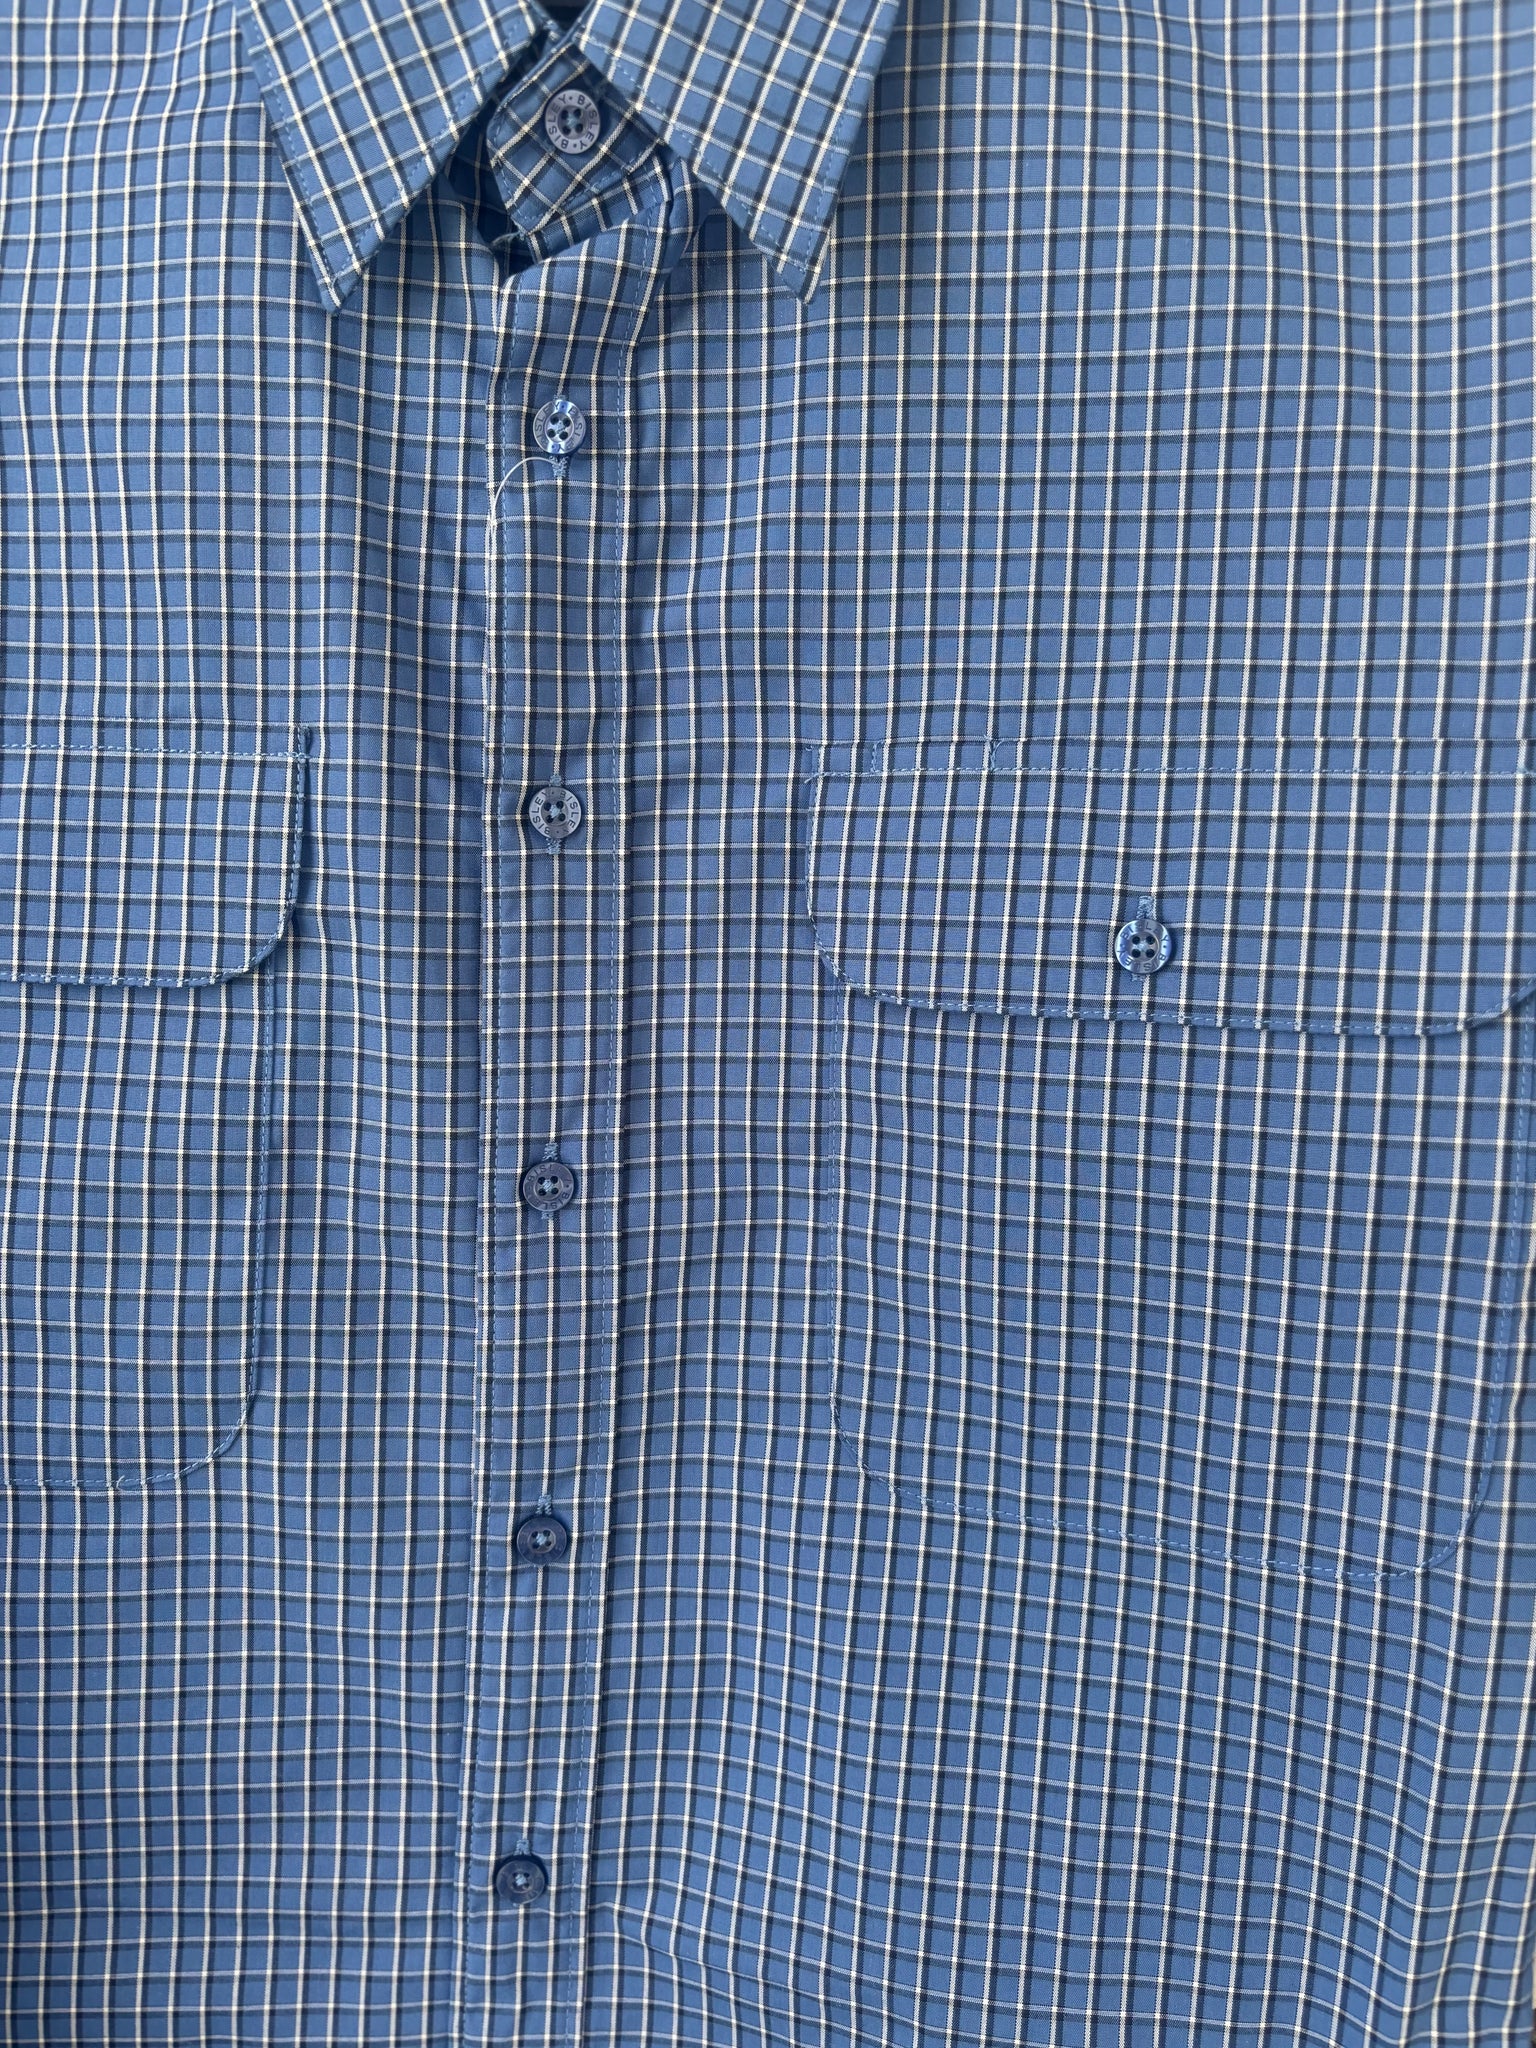 BS70287_CRIV Bisley Mens L/S Shirt Sml Check Blue